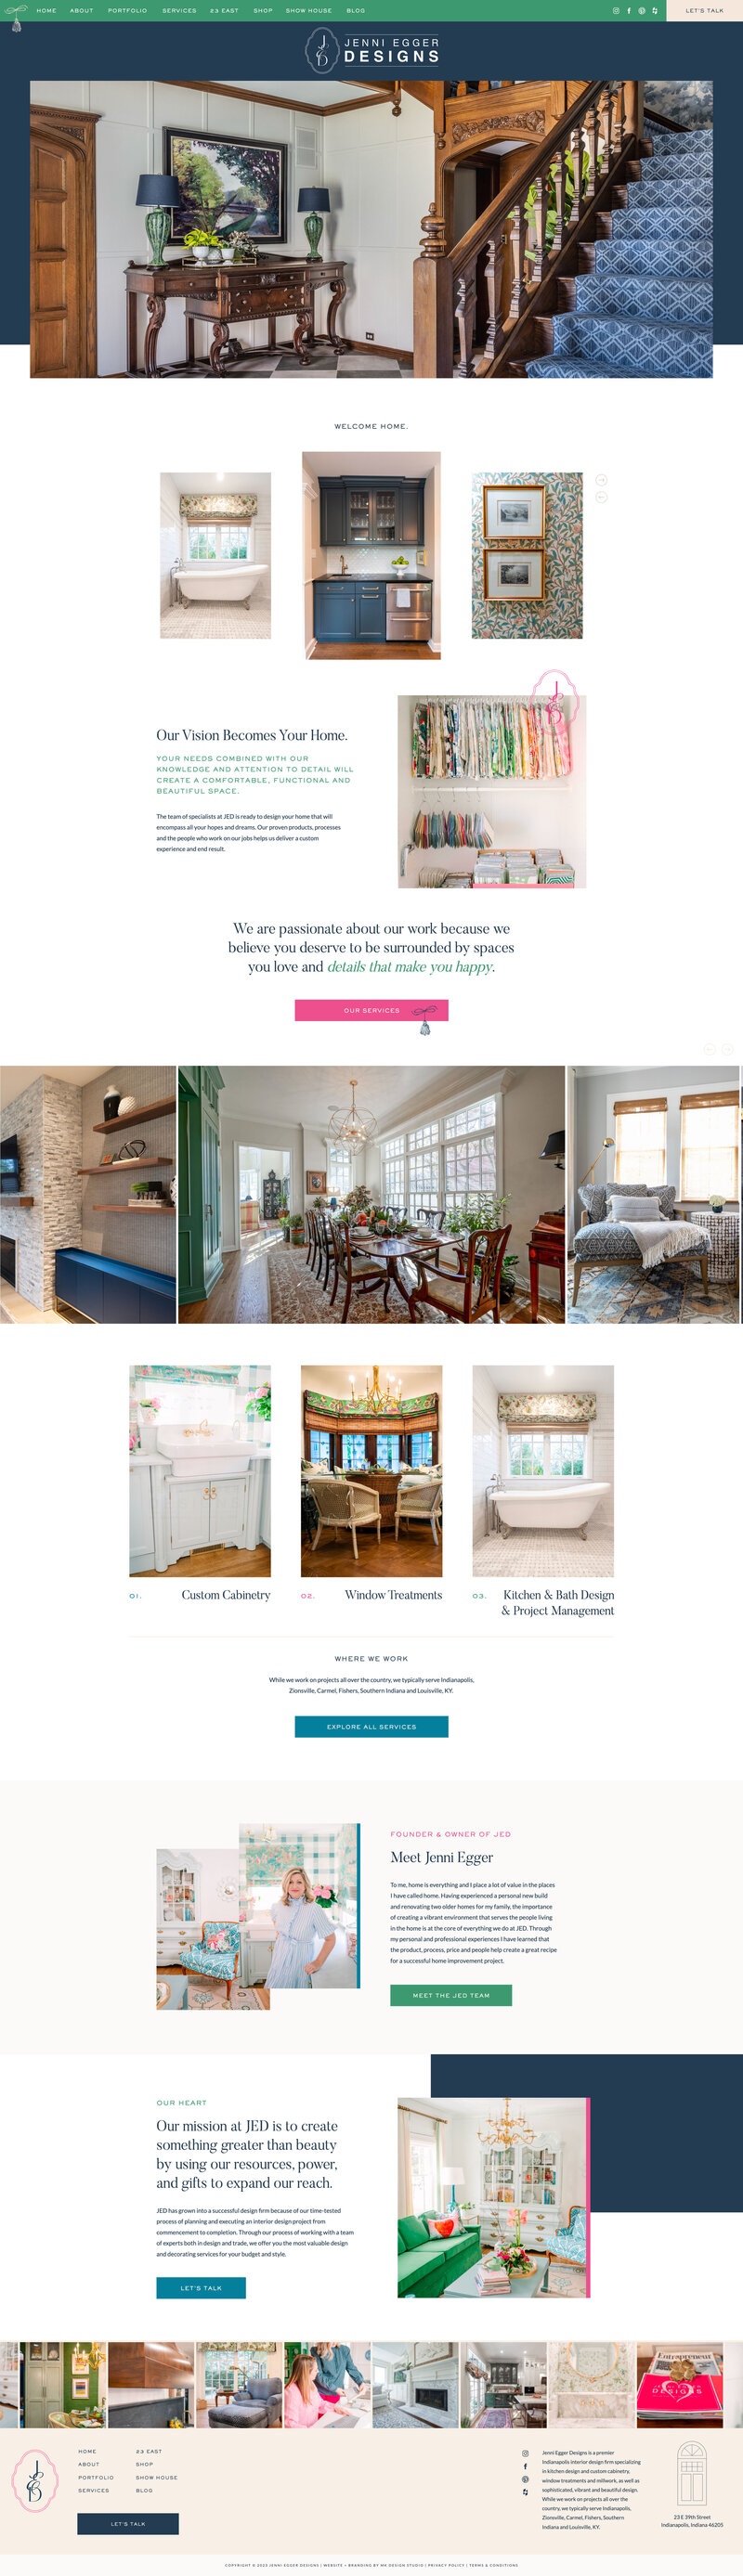 mockup showing a colorful interior design website